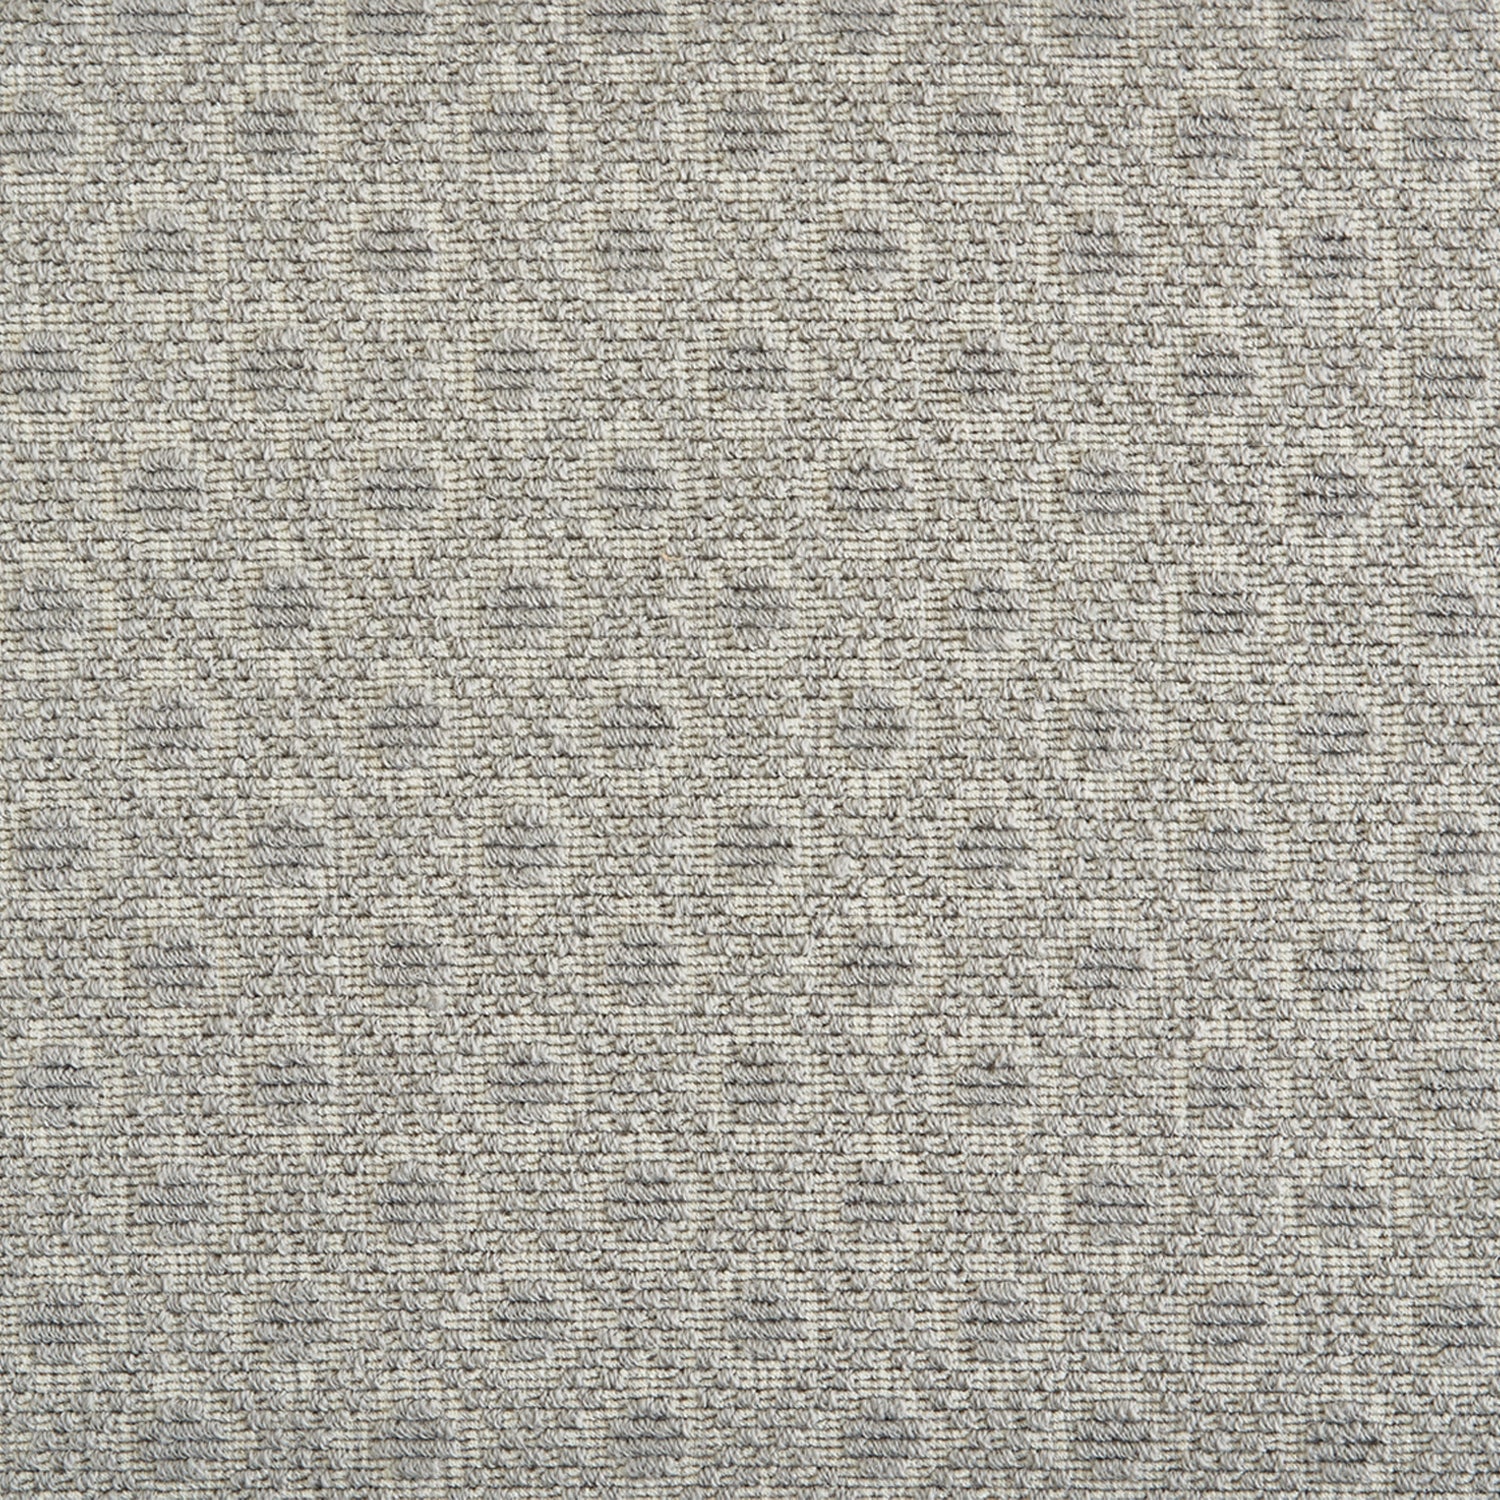 Wool-blend broadloom carpet swatch in a diamond weave in shades of grey.